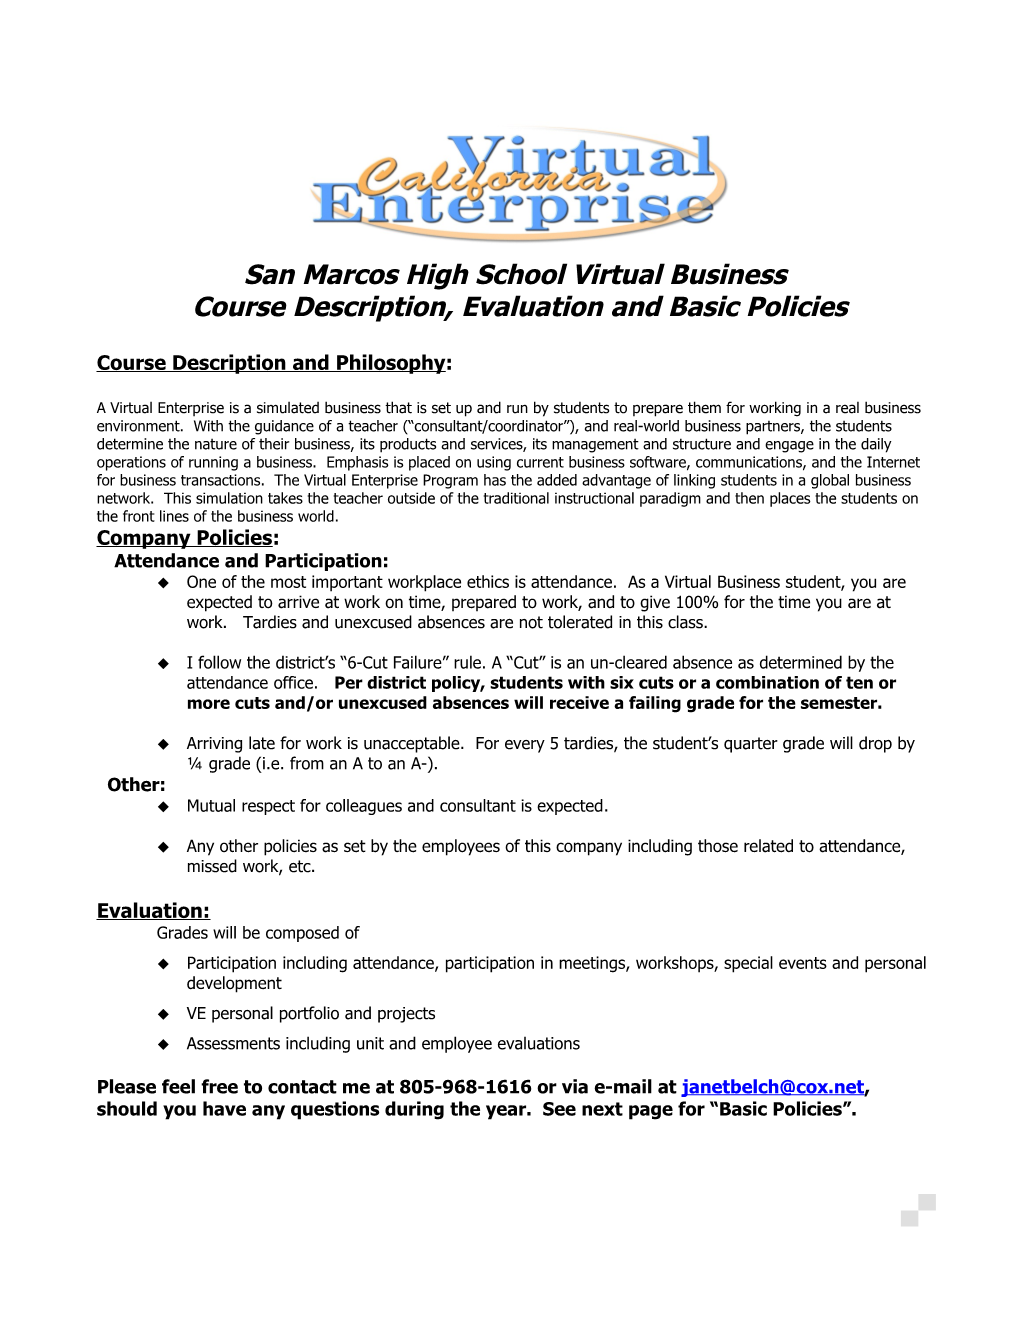 Course Description, Evaluation and Basic Policies